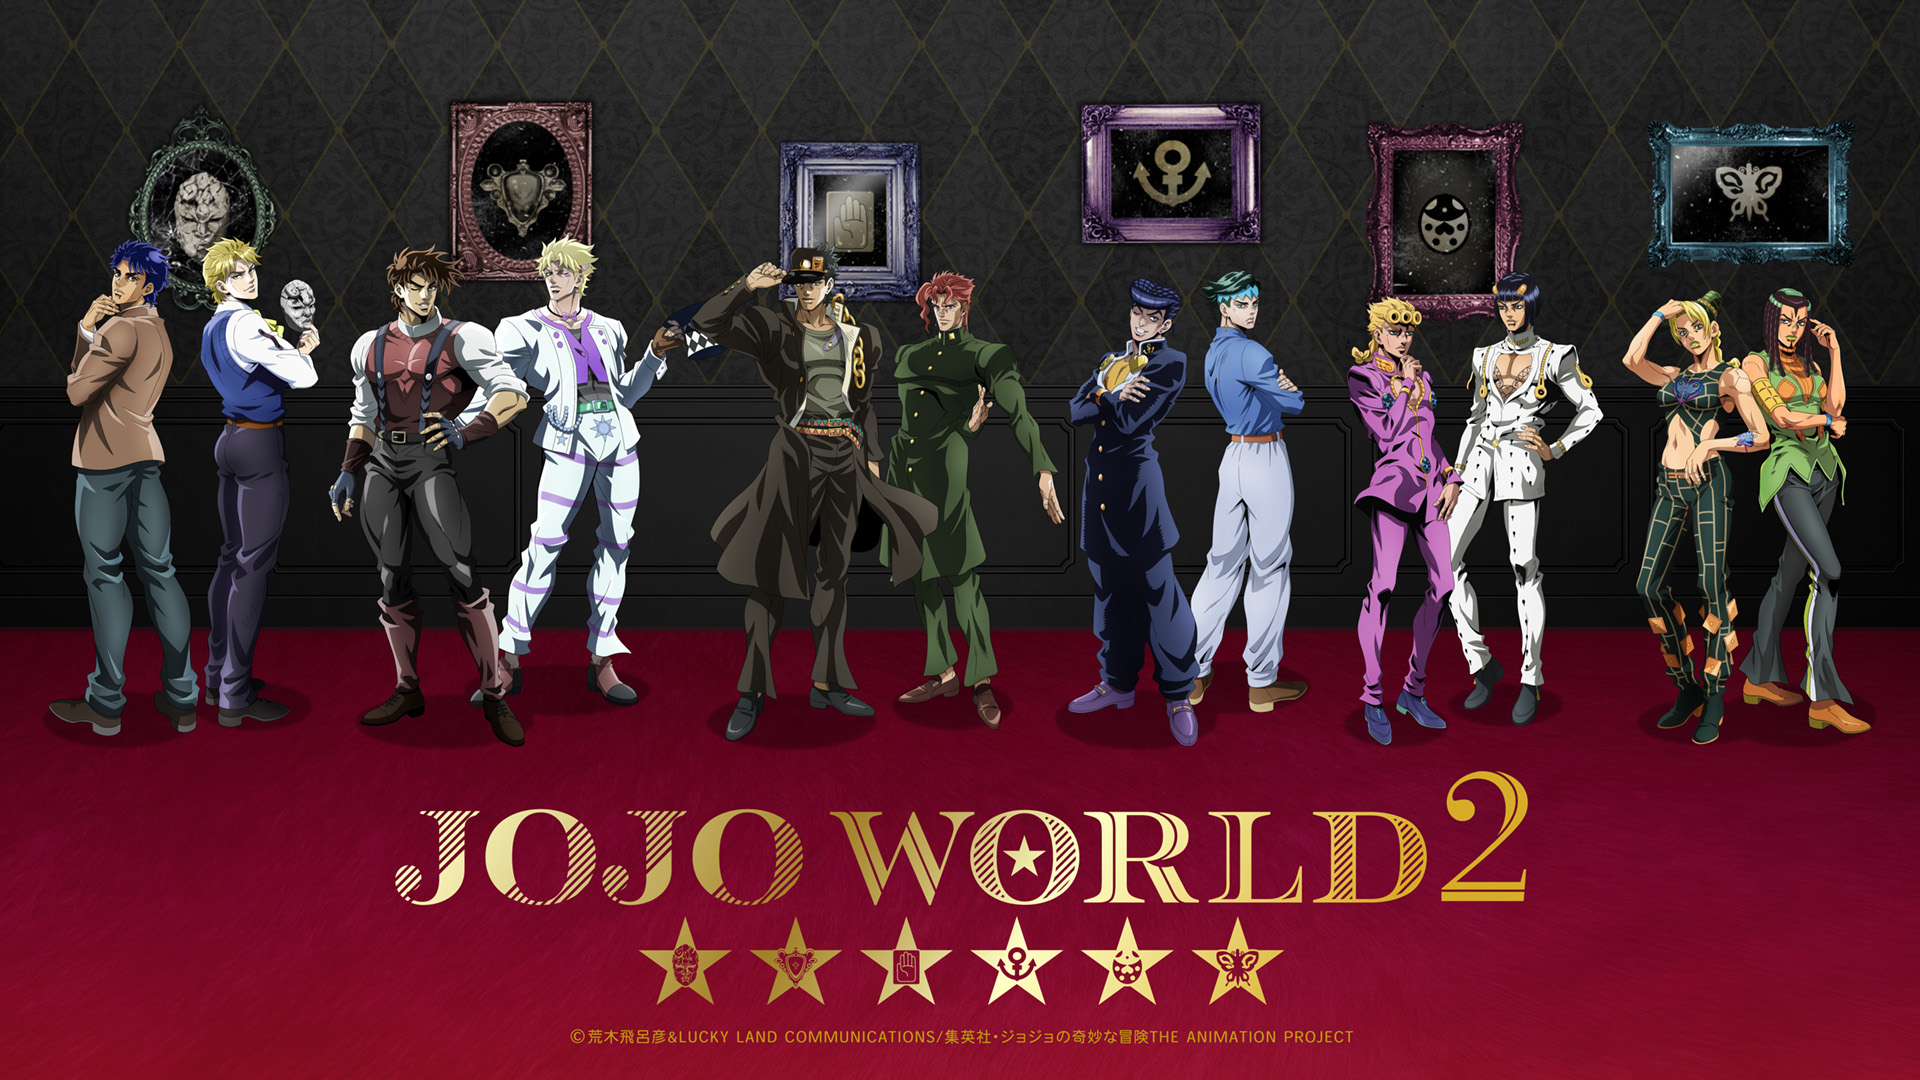 JOJO WORLD 2 event alternate main visual